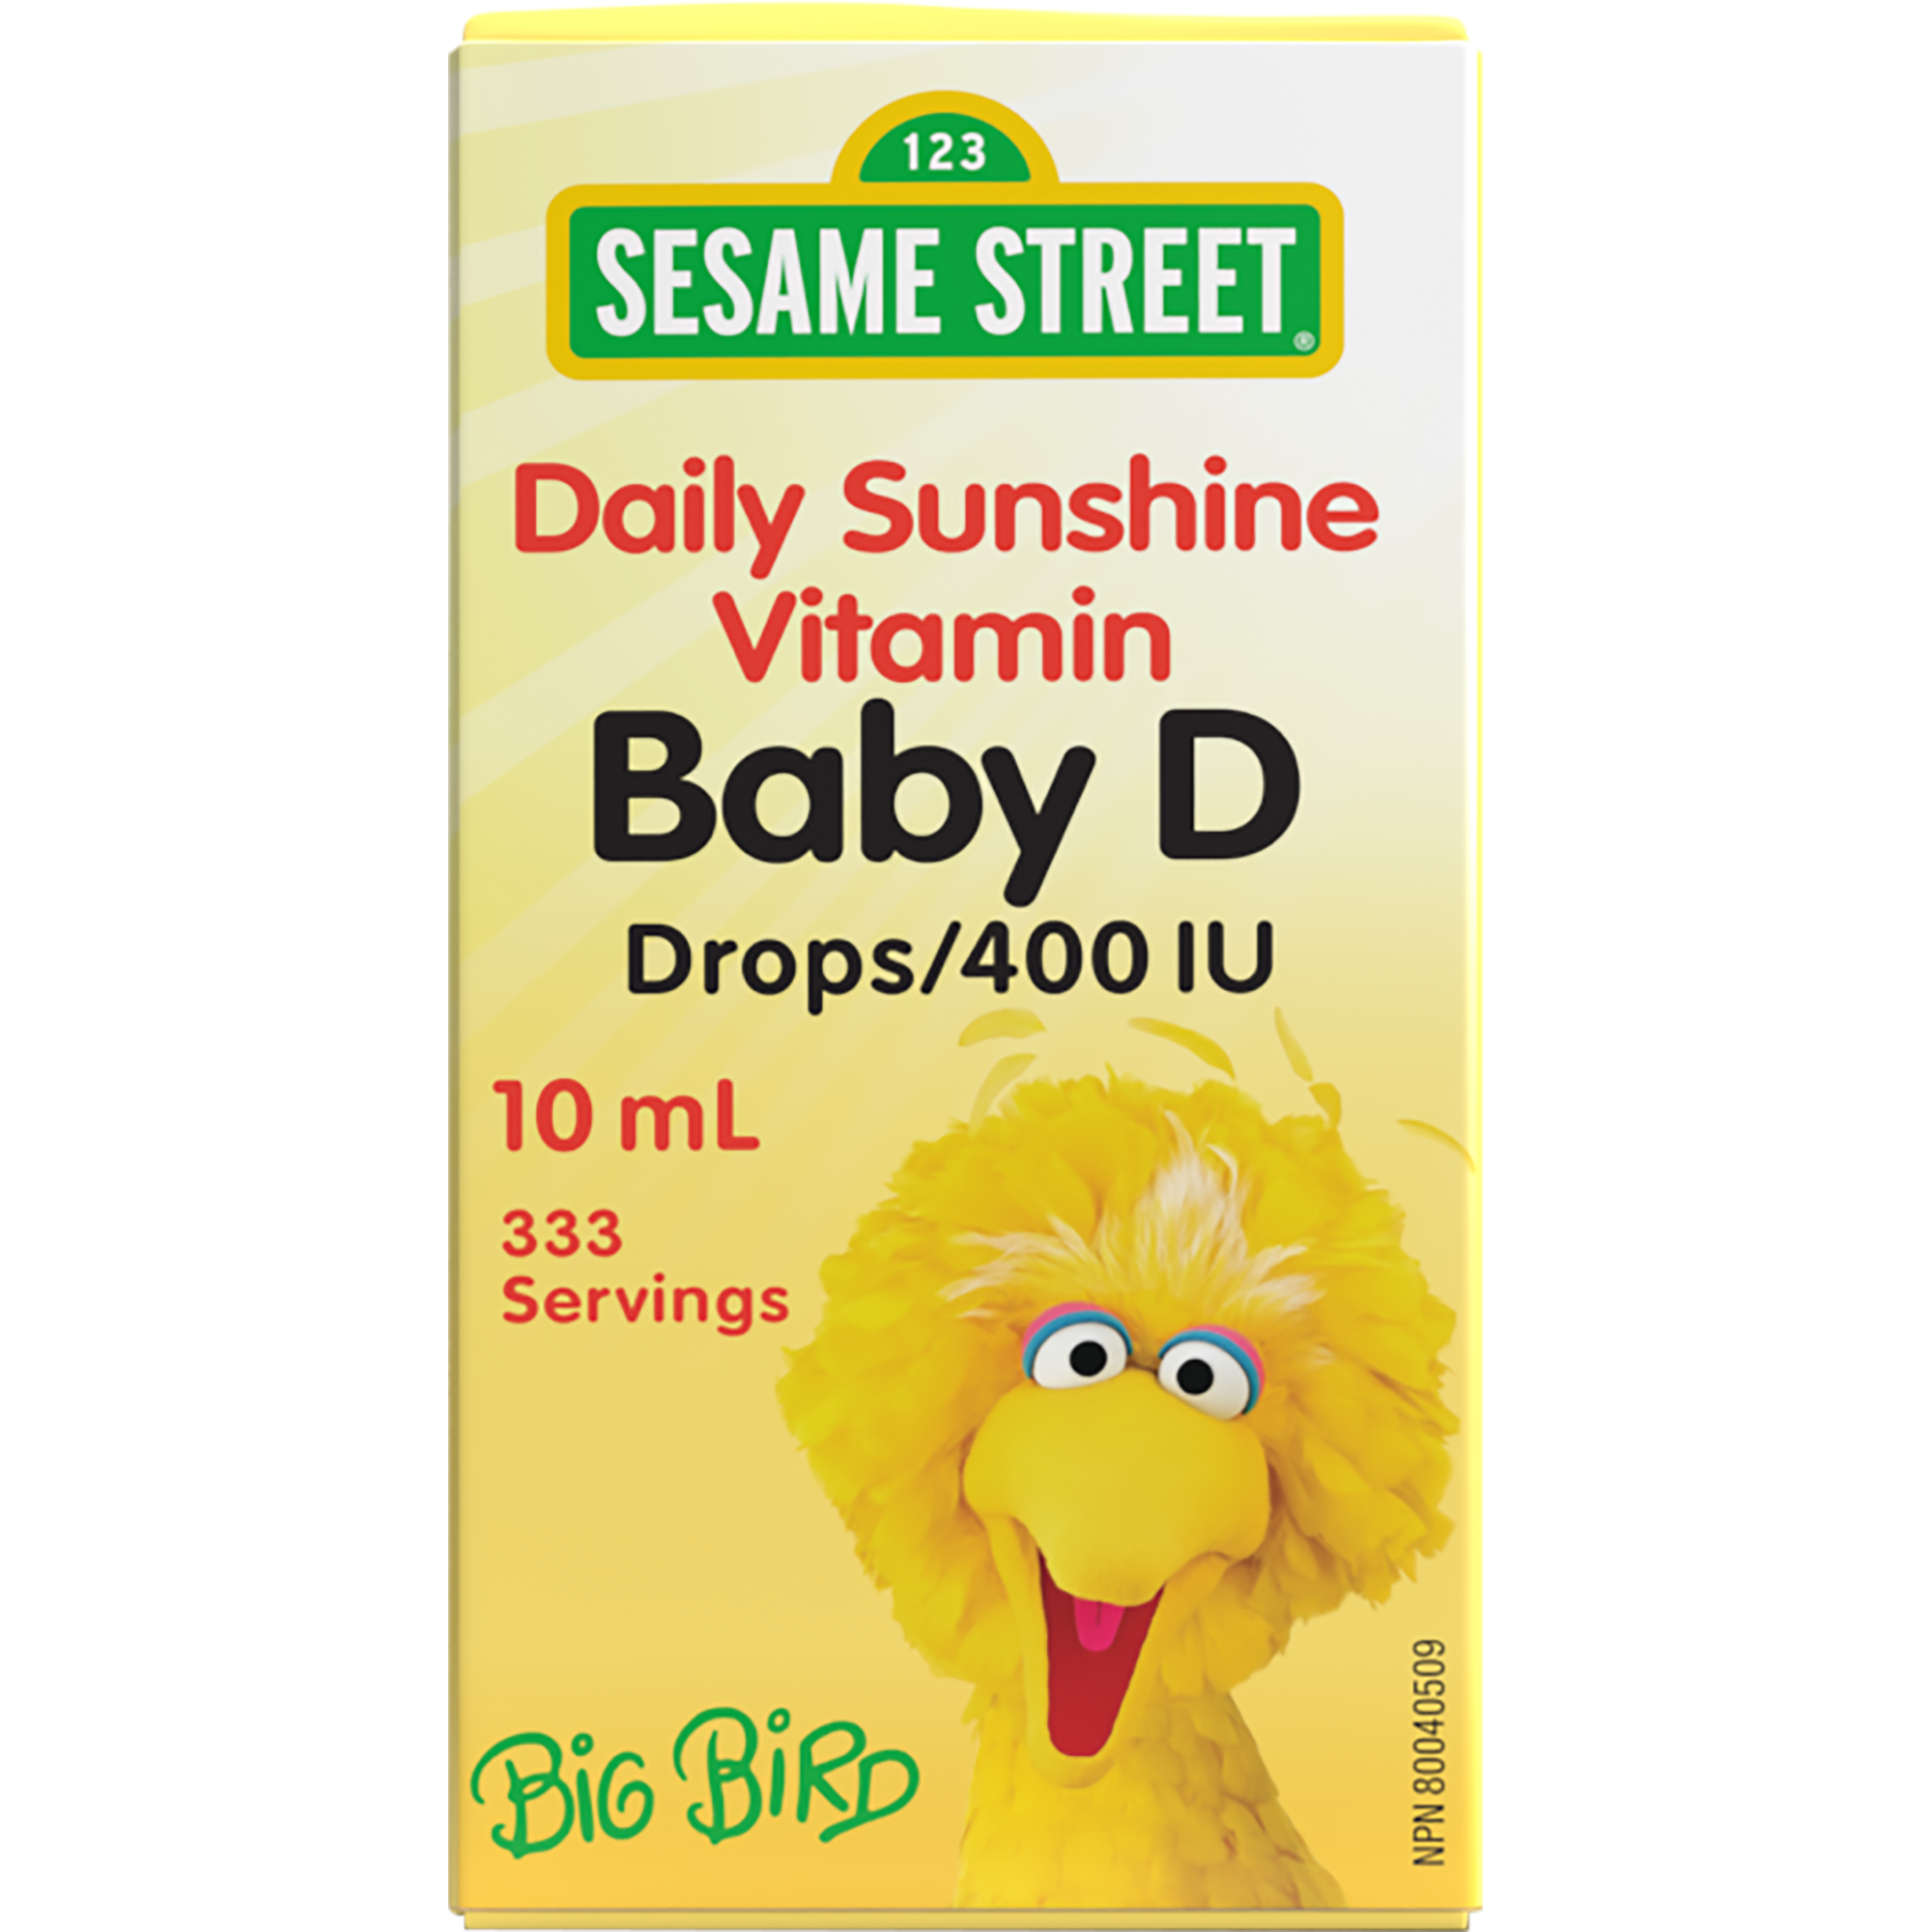 Daily Sunshine Vitamin Baby D 400 IU for Sesame Street®|v|hi-res|WN3692